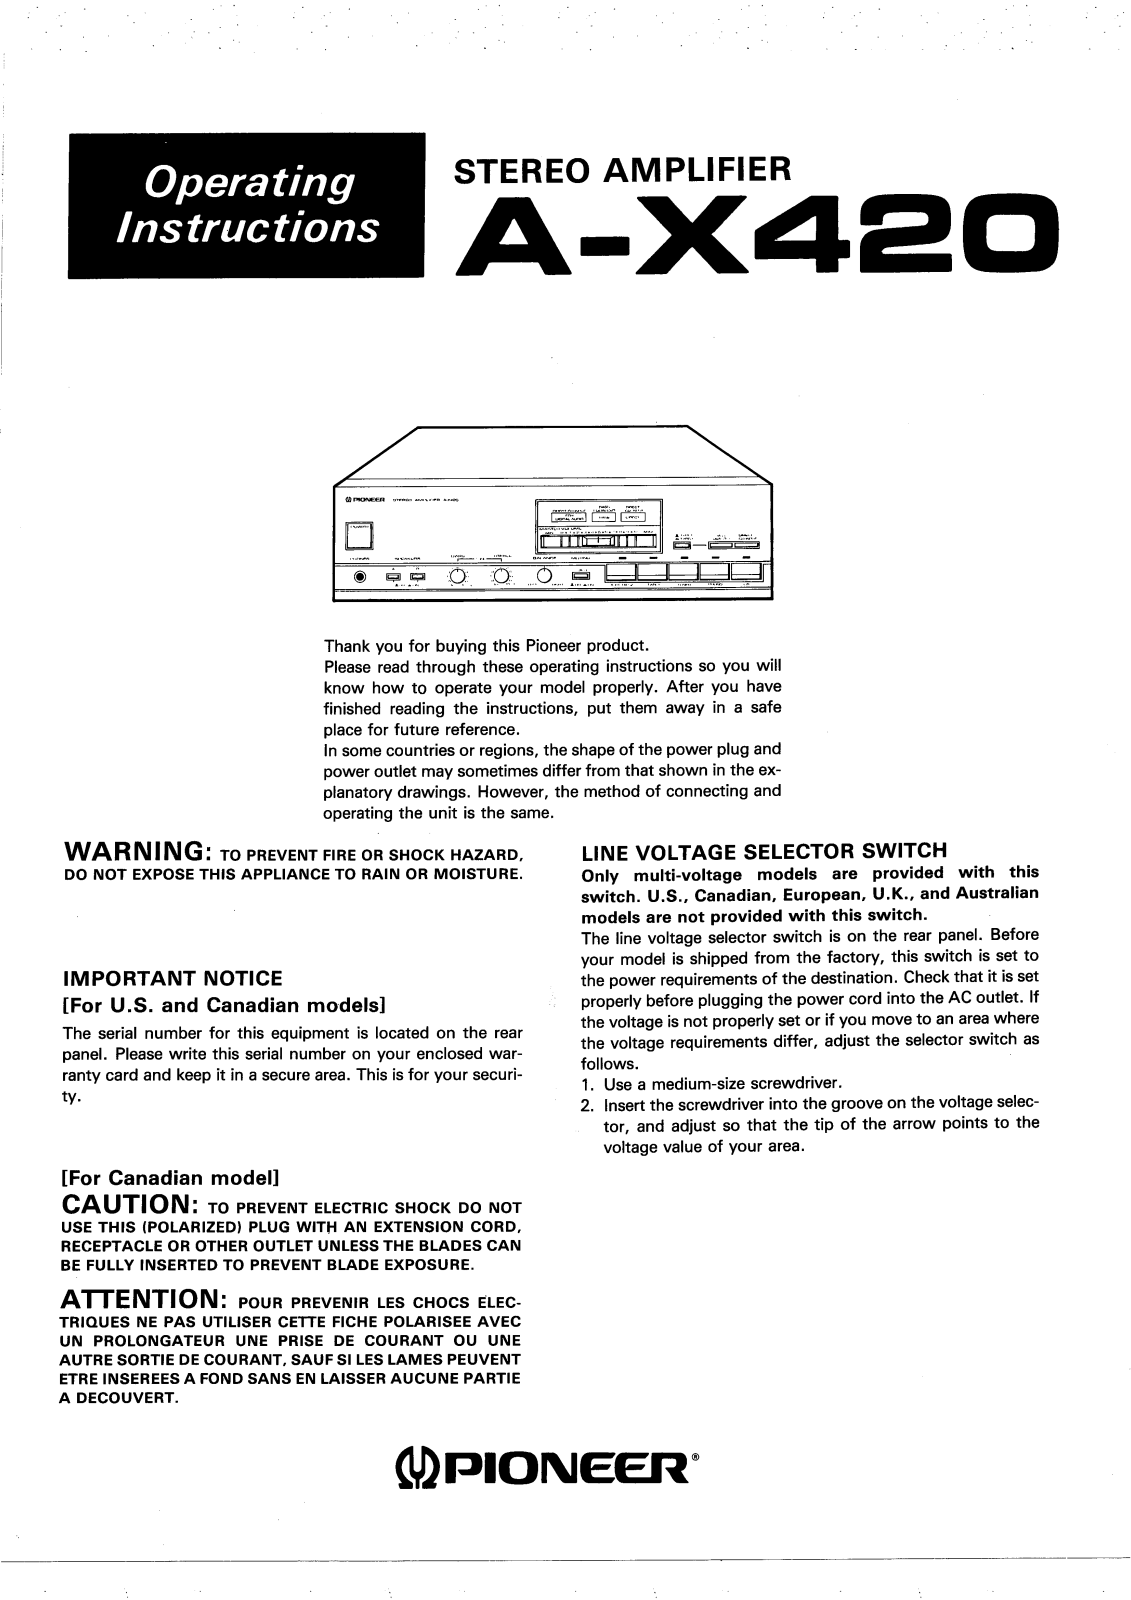 Pioneer A-X420 Manual